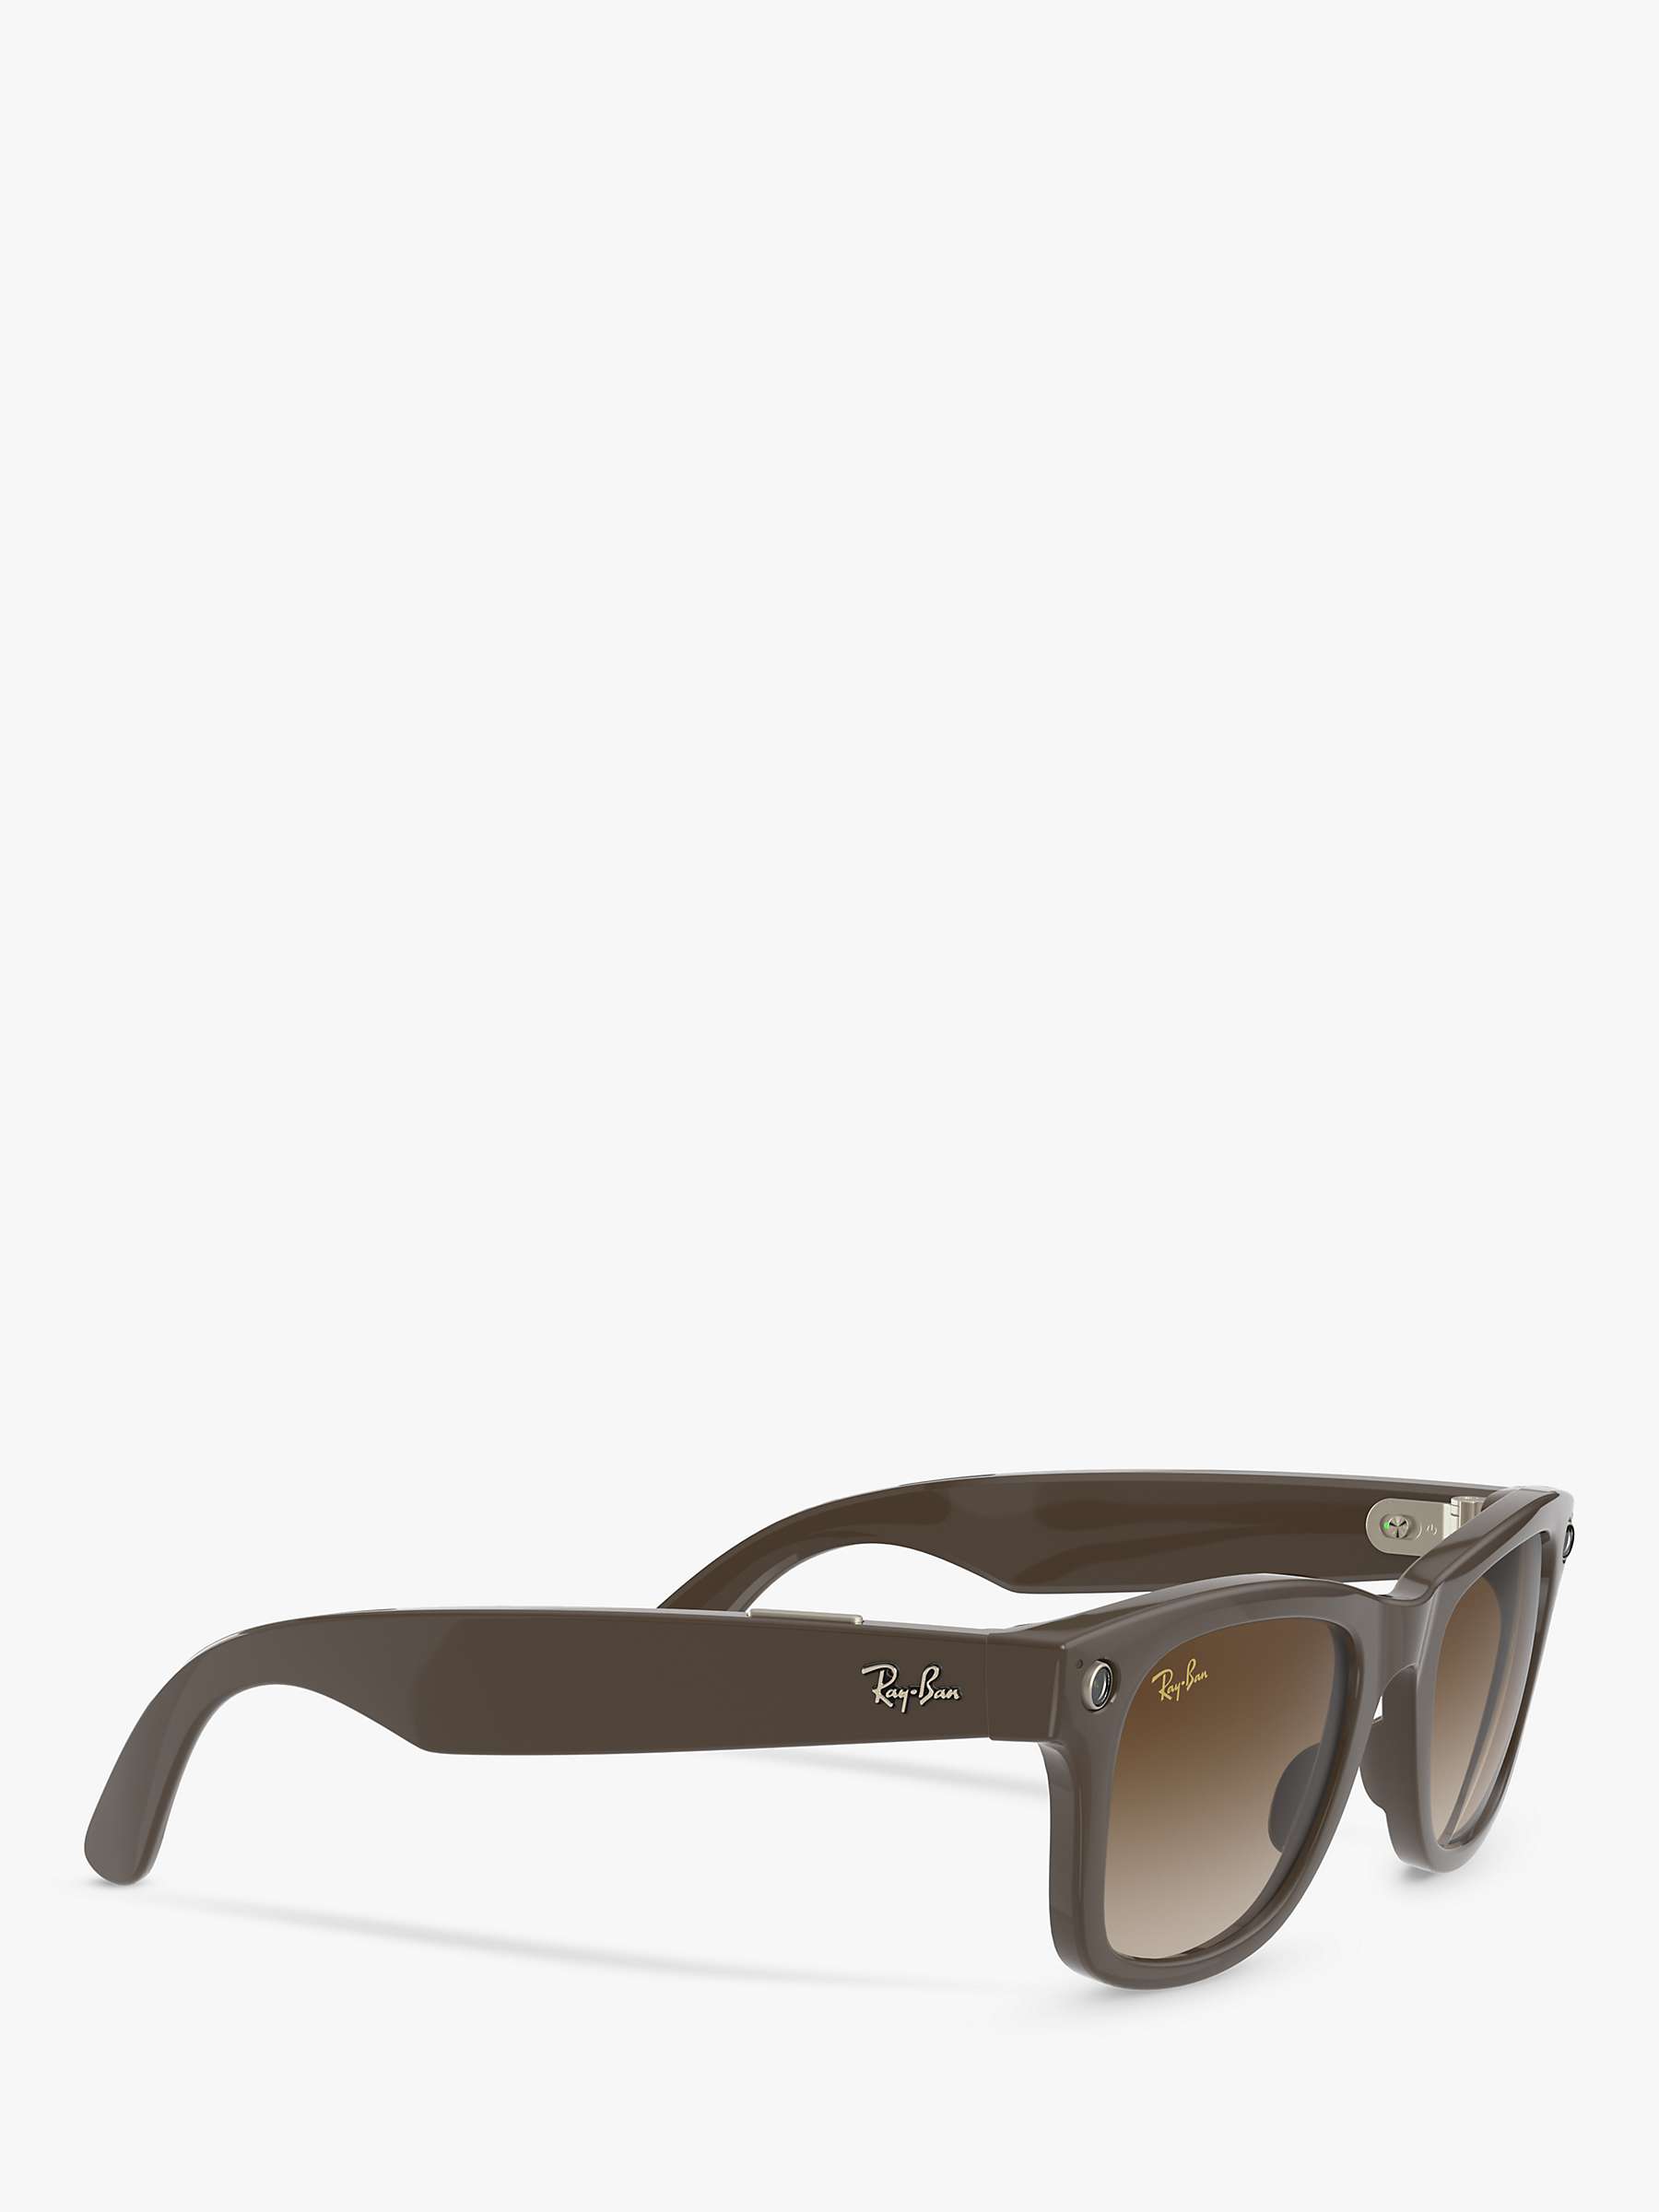 Buy Ray-Ban Stories Wayfarer Smart Sunglasses, Shiny Brown/Gradient Brown Online at johnlewis.com